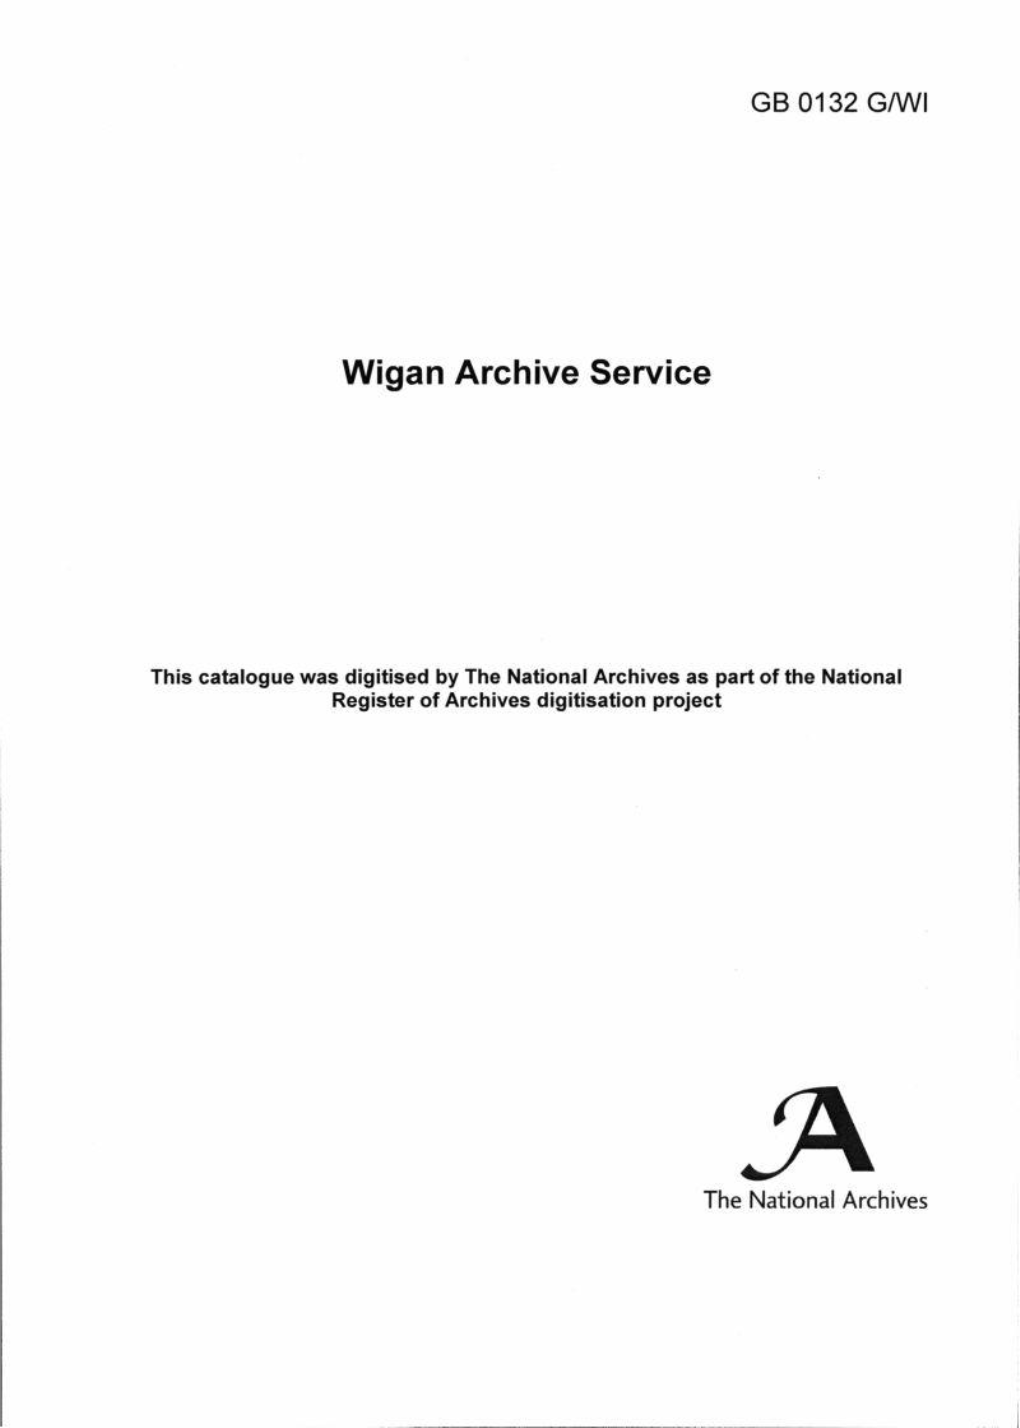 Wigan Archive Service